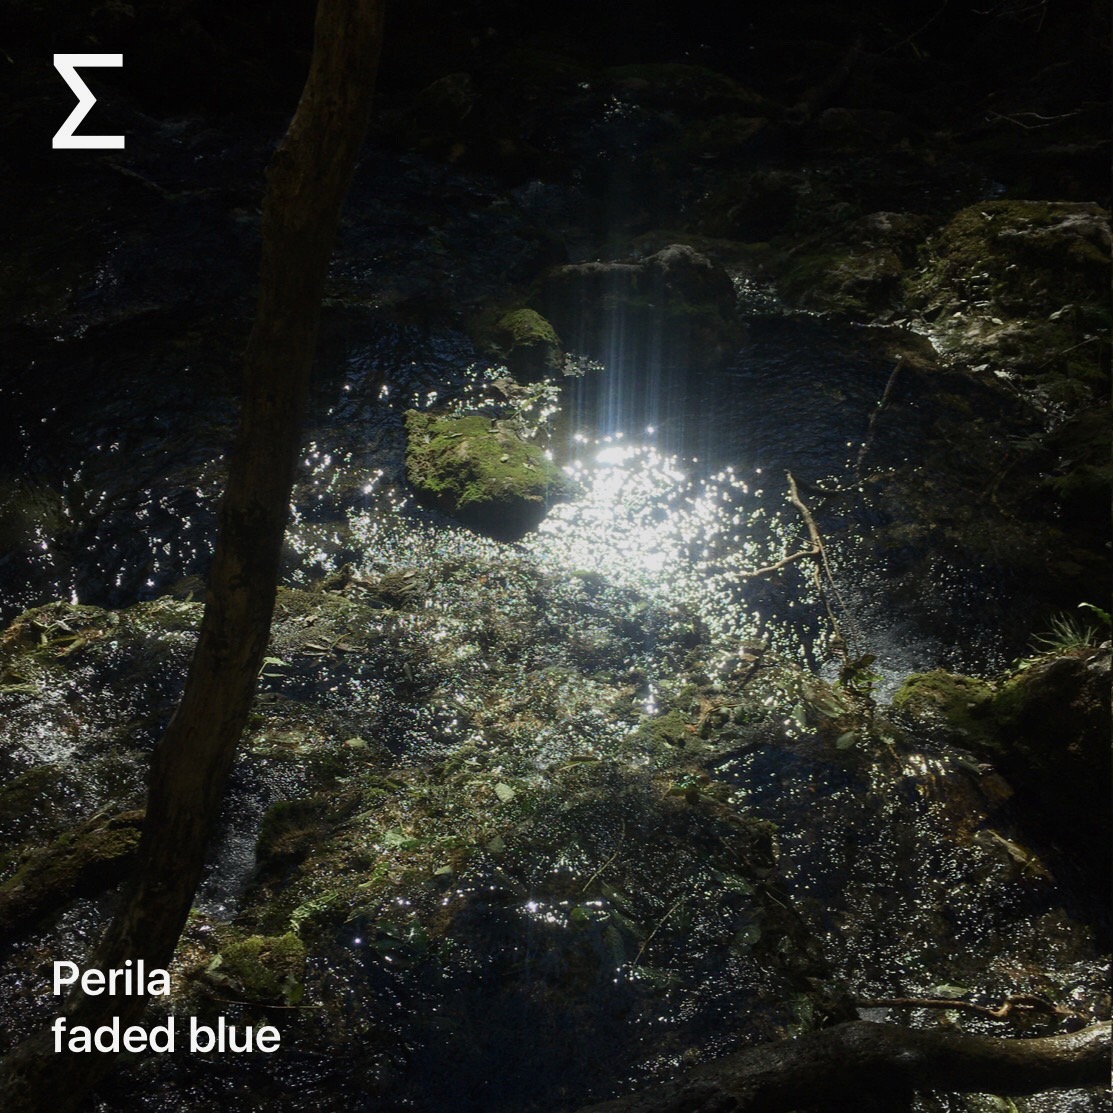 Perila – faded blue